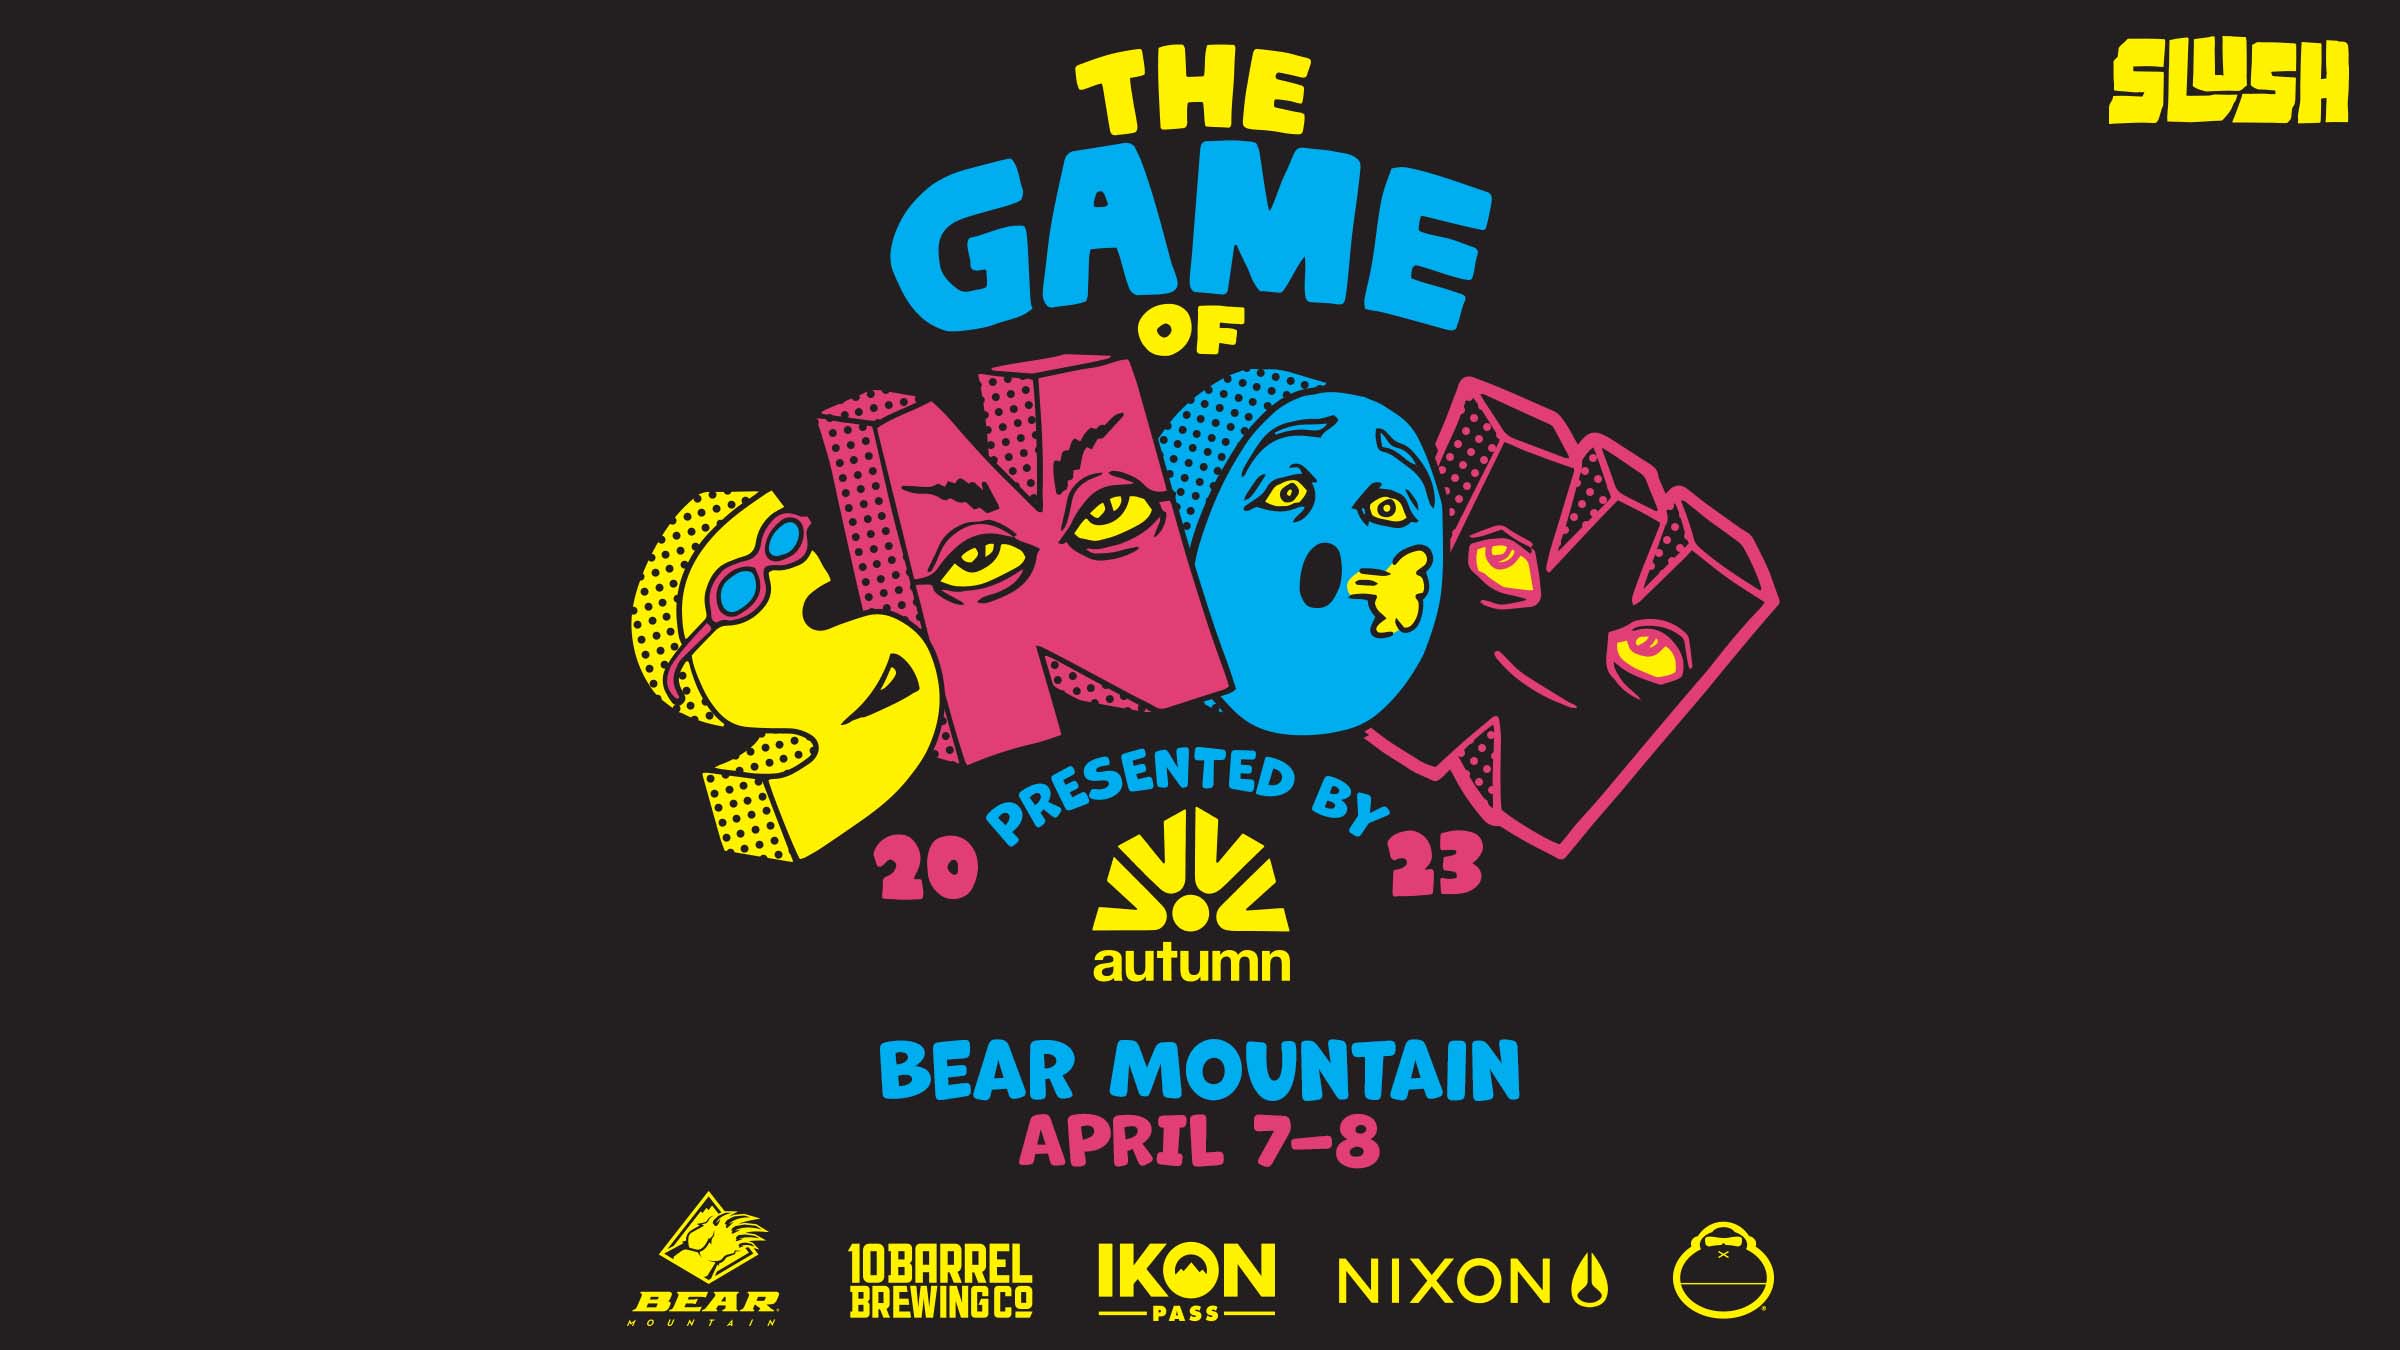 Slush Mag event Game of SNOW at Bear Mountain on April 7-8